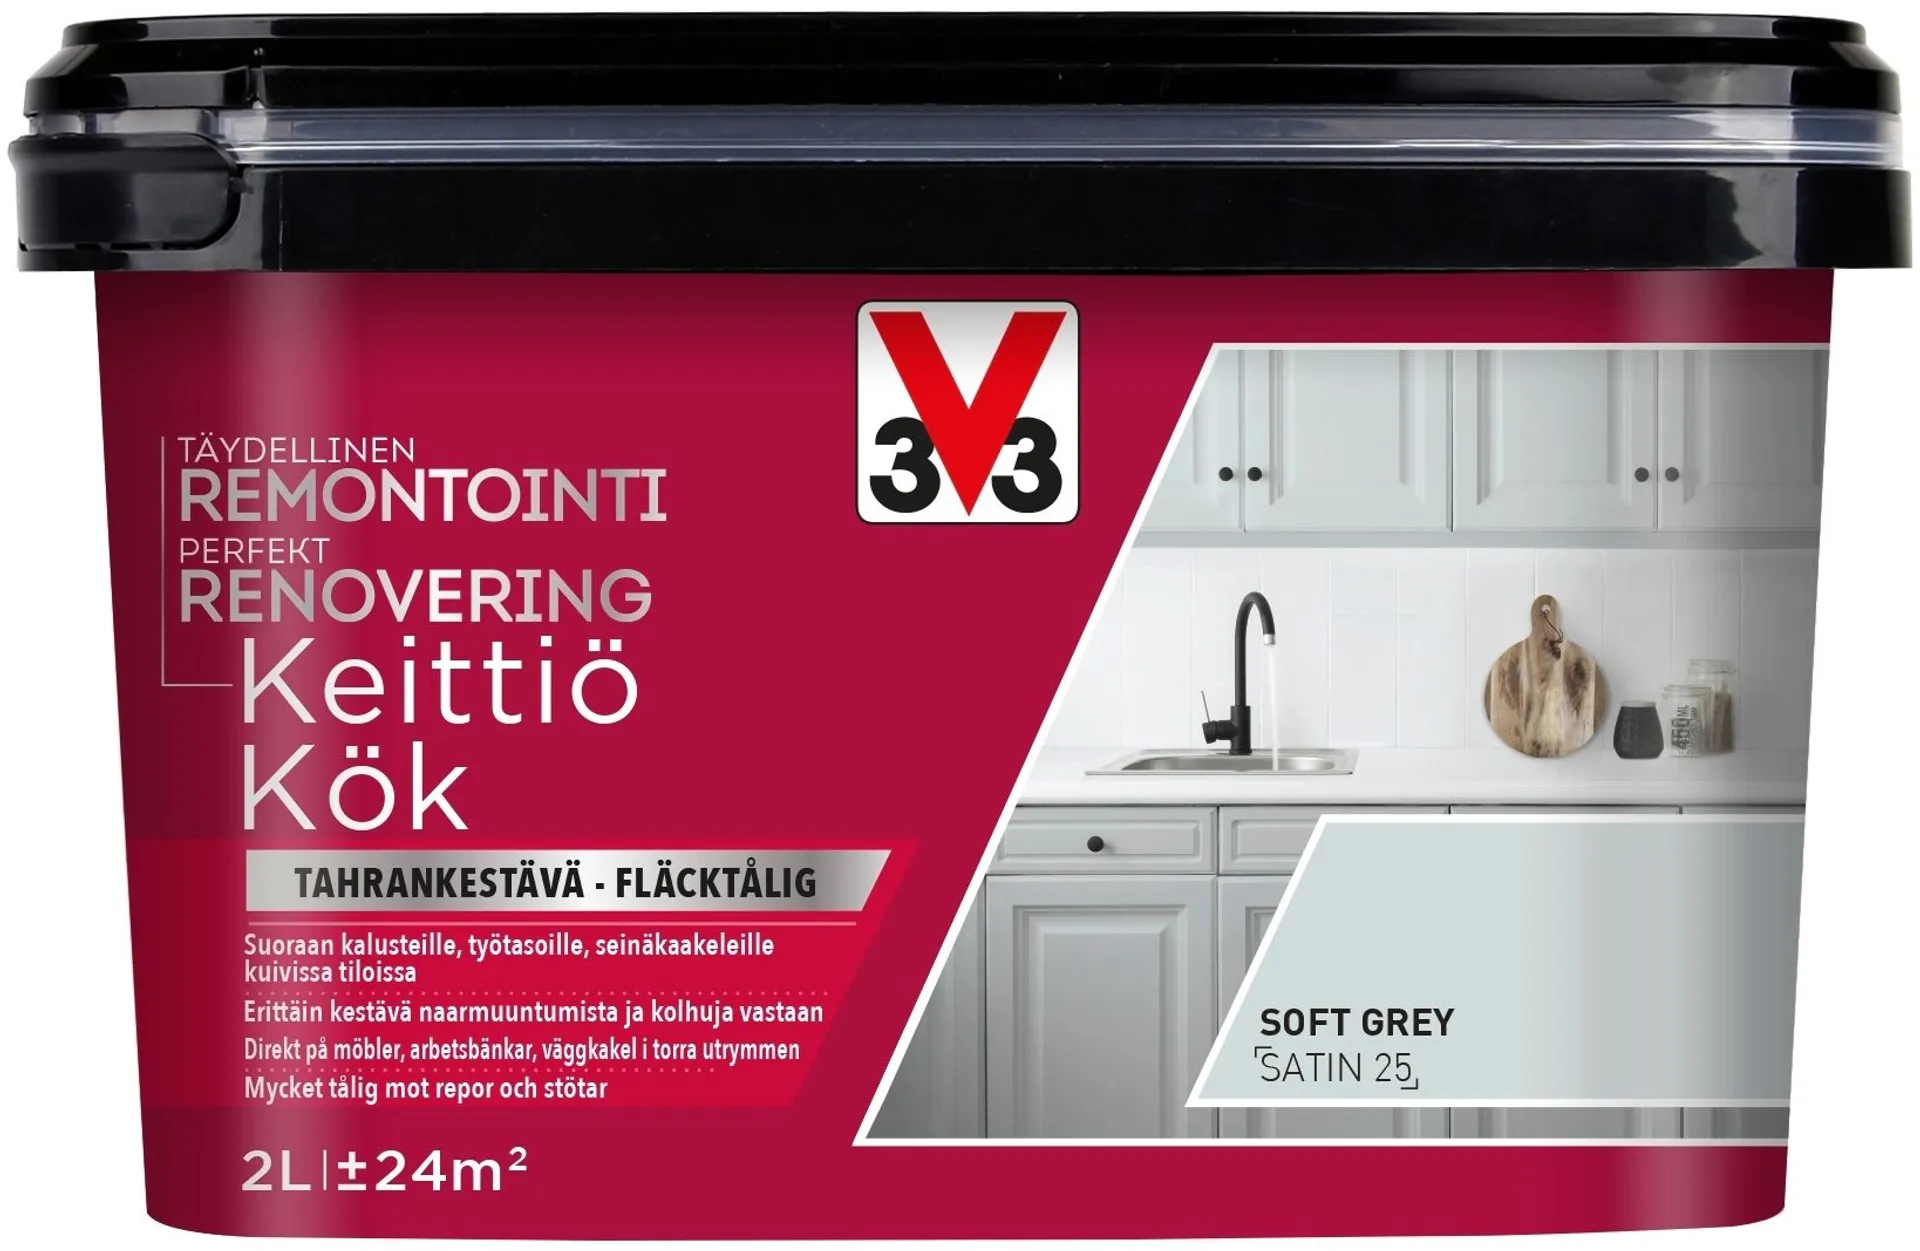 V33 Remontointimaali keittiö 2L Soft grey